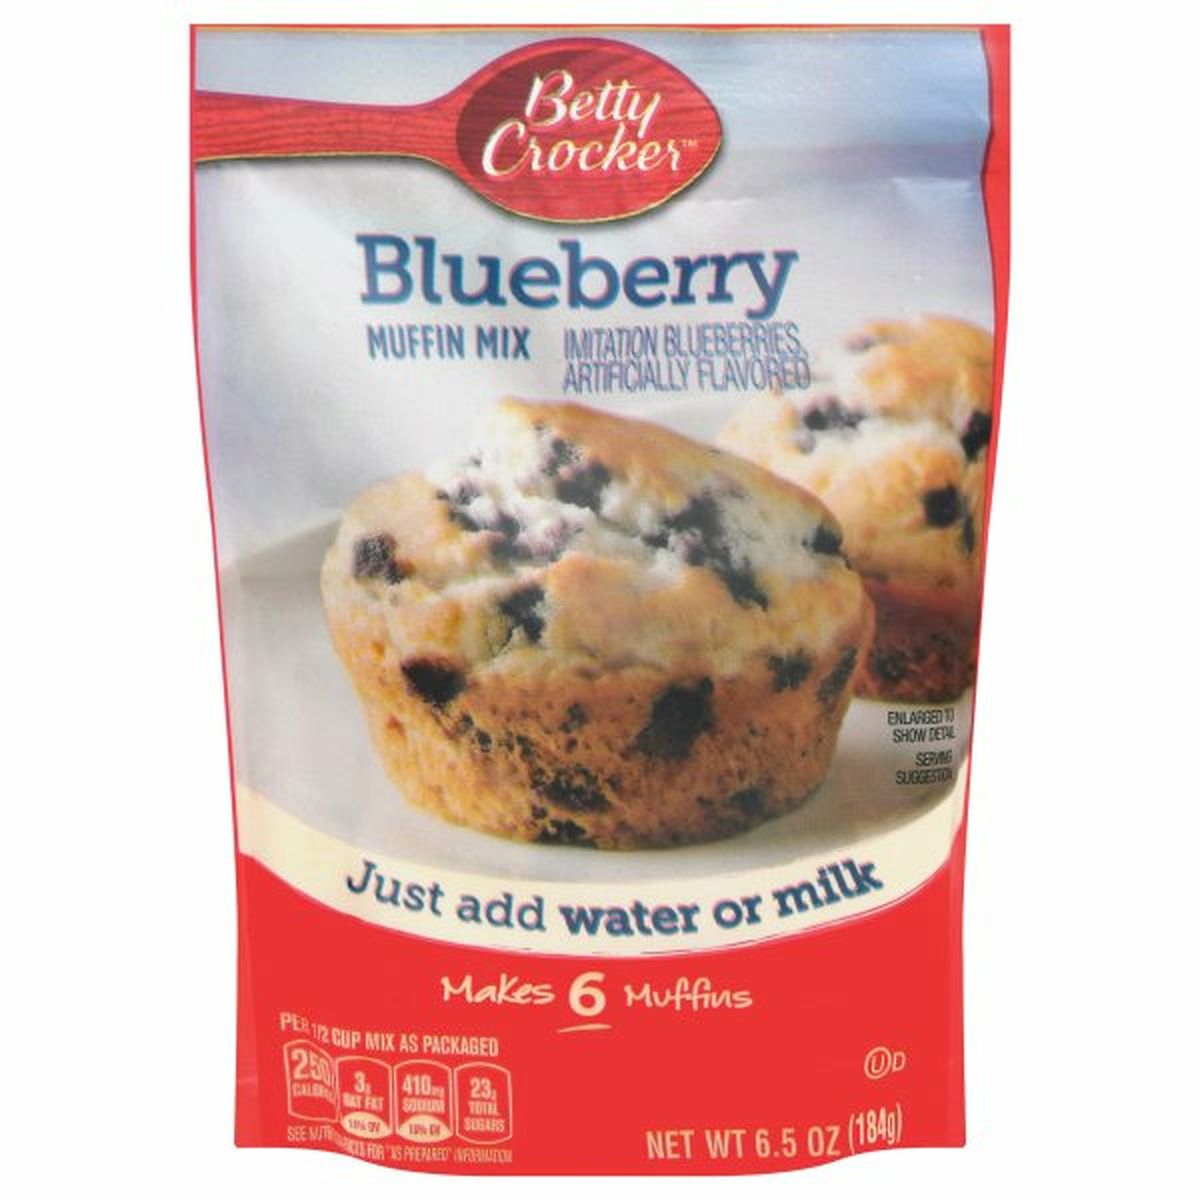 Calories in Betty Crocker Muffin Mix, Blueberry